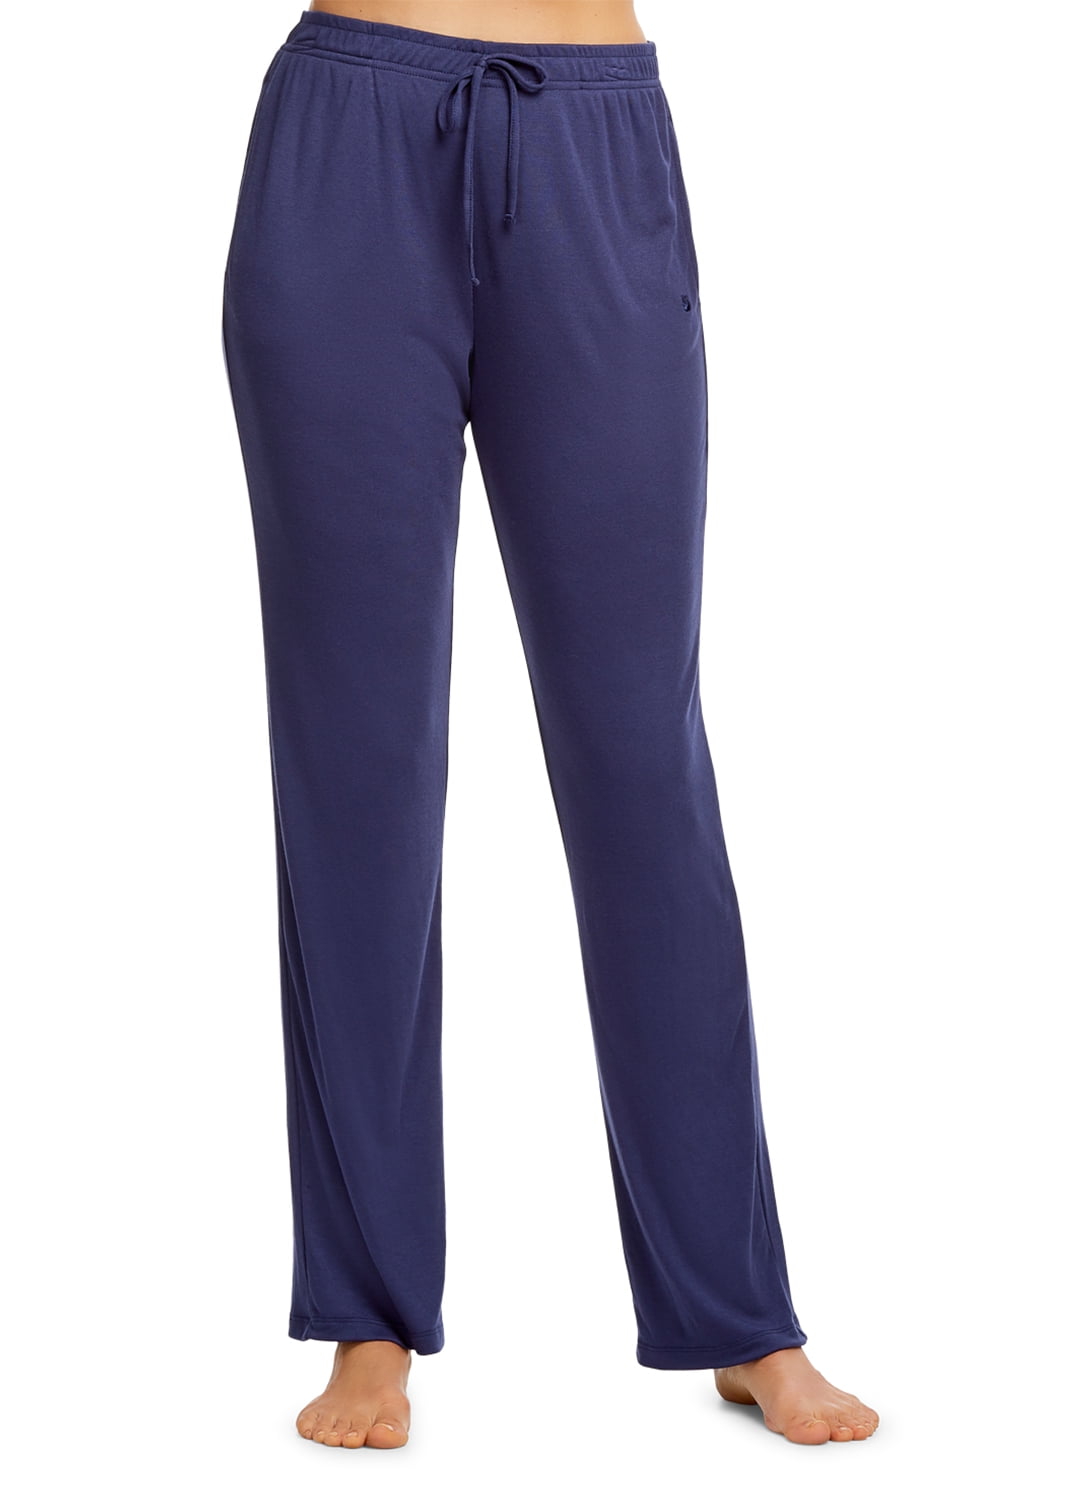 Gloria Vanderbilt Women's Sleep Pants | Stylish Comfortable Pajama ...